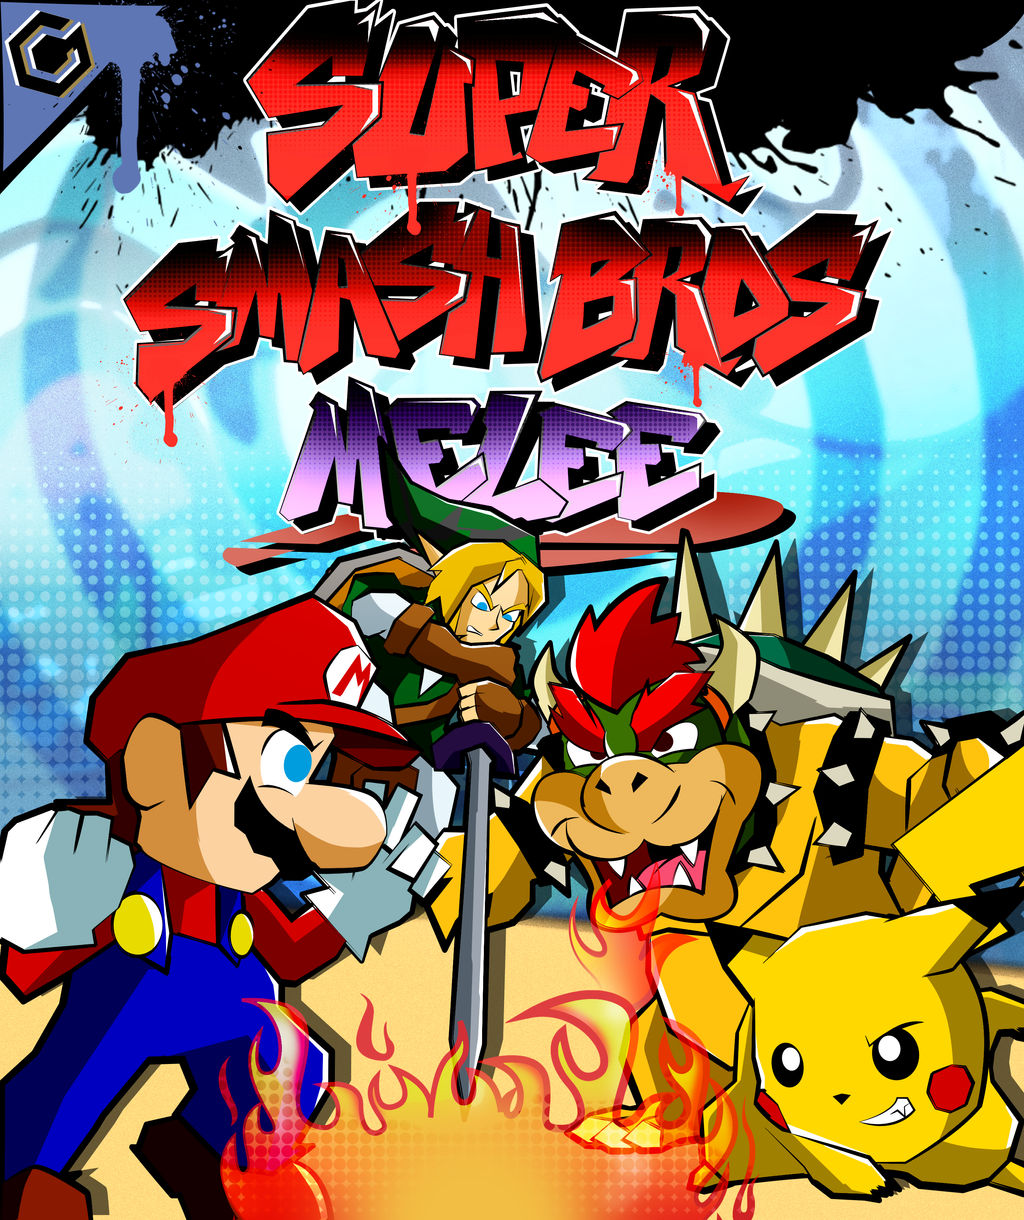 Super Smash Bros Melee Download 1.02 - Colaboratory